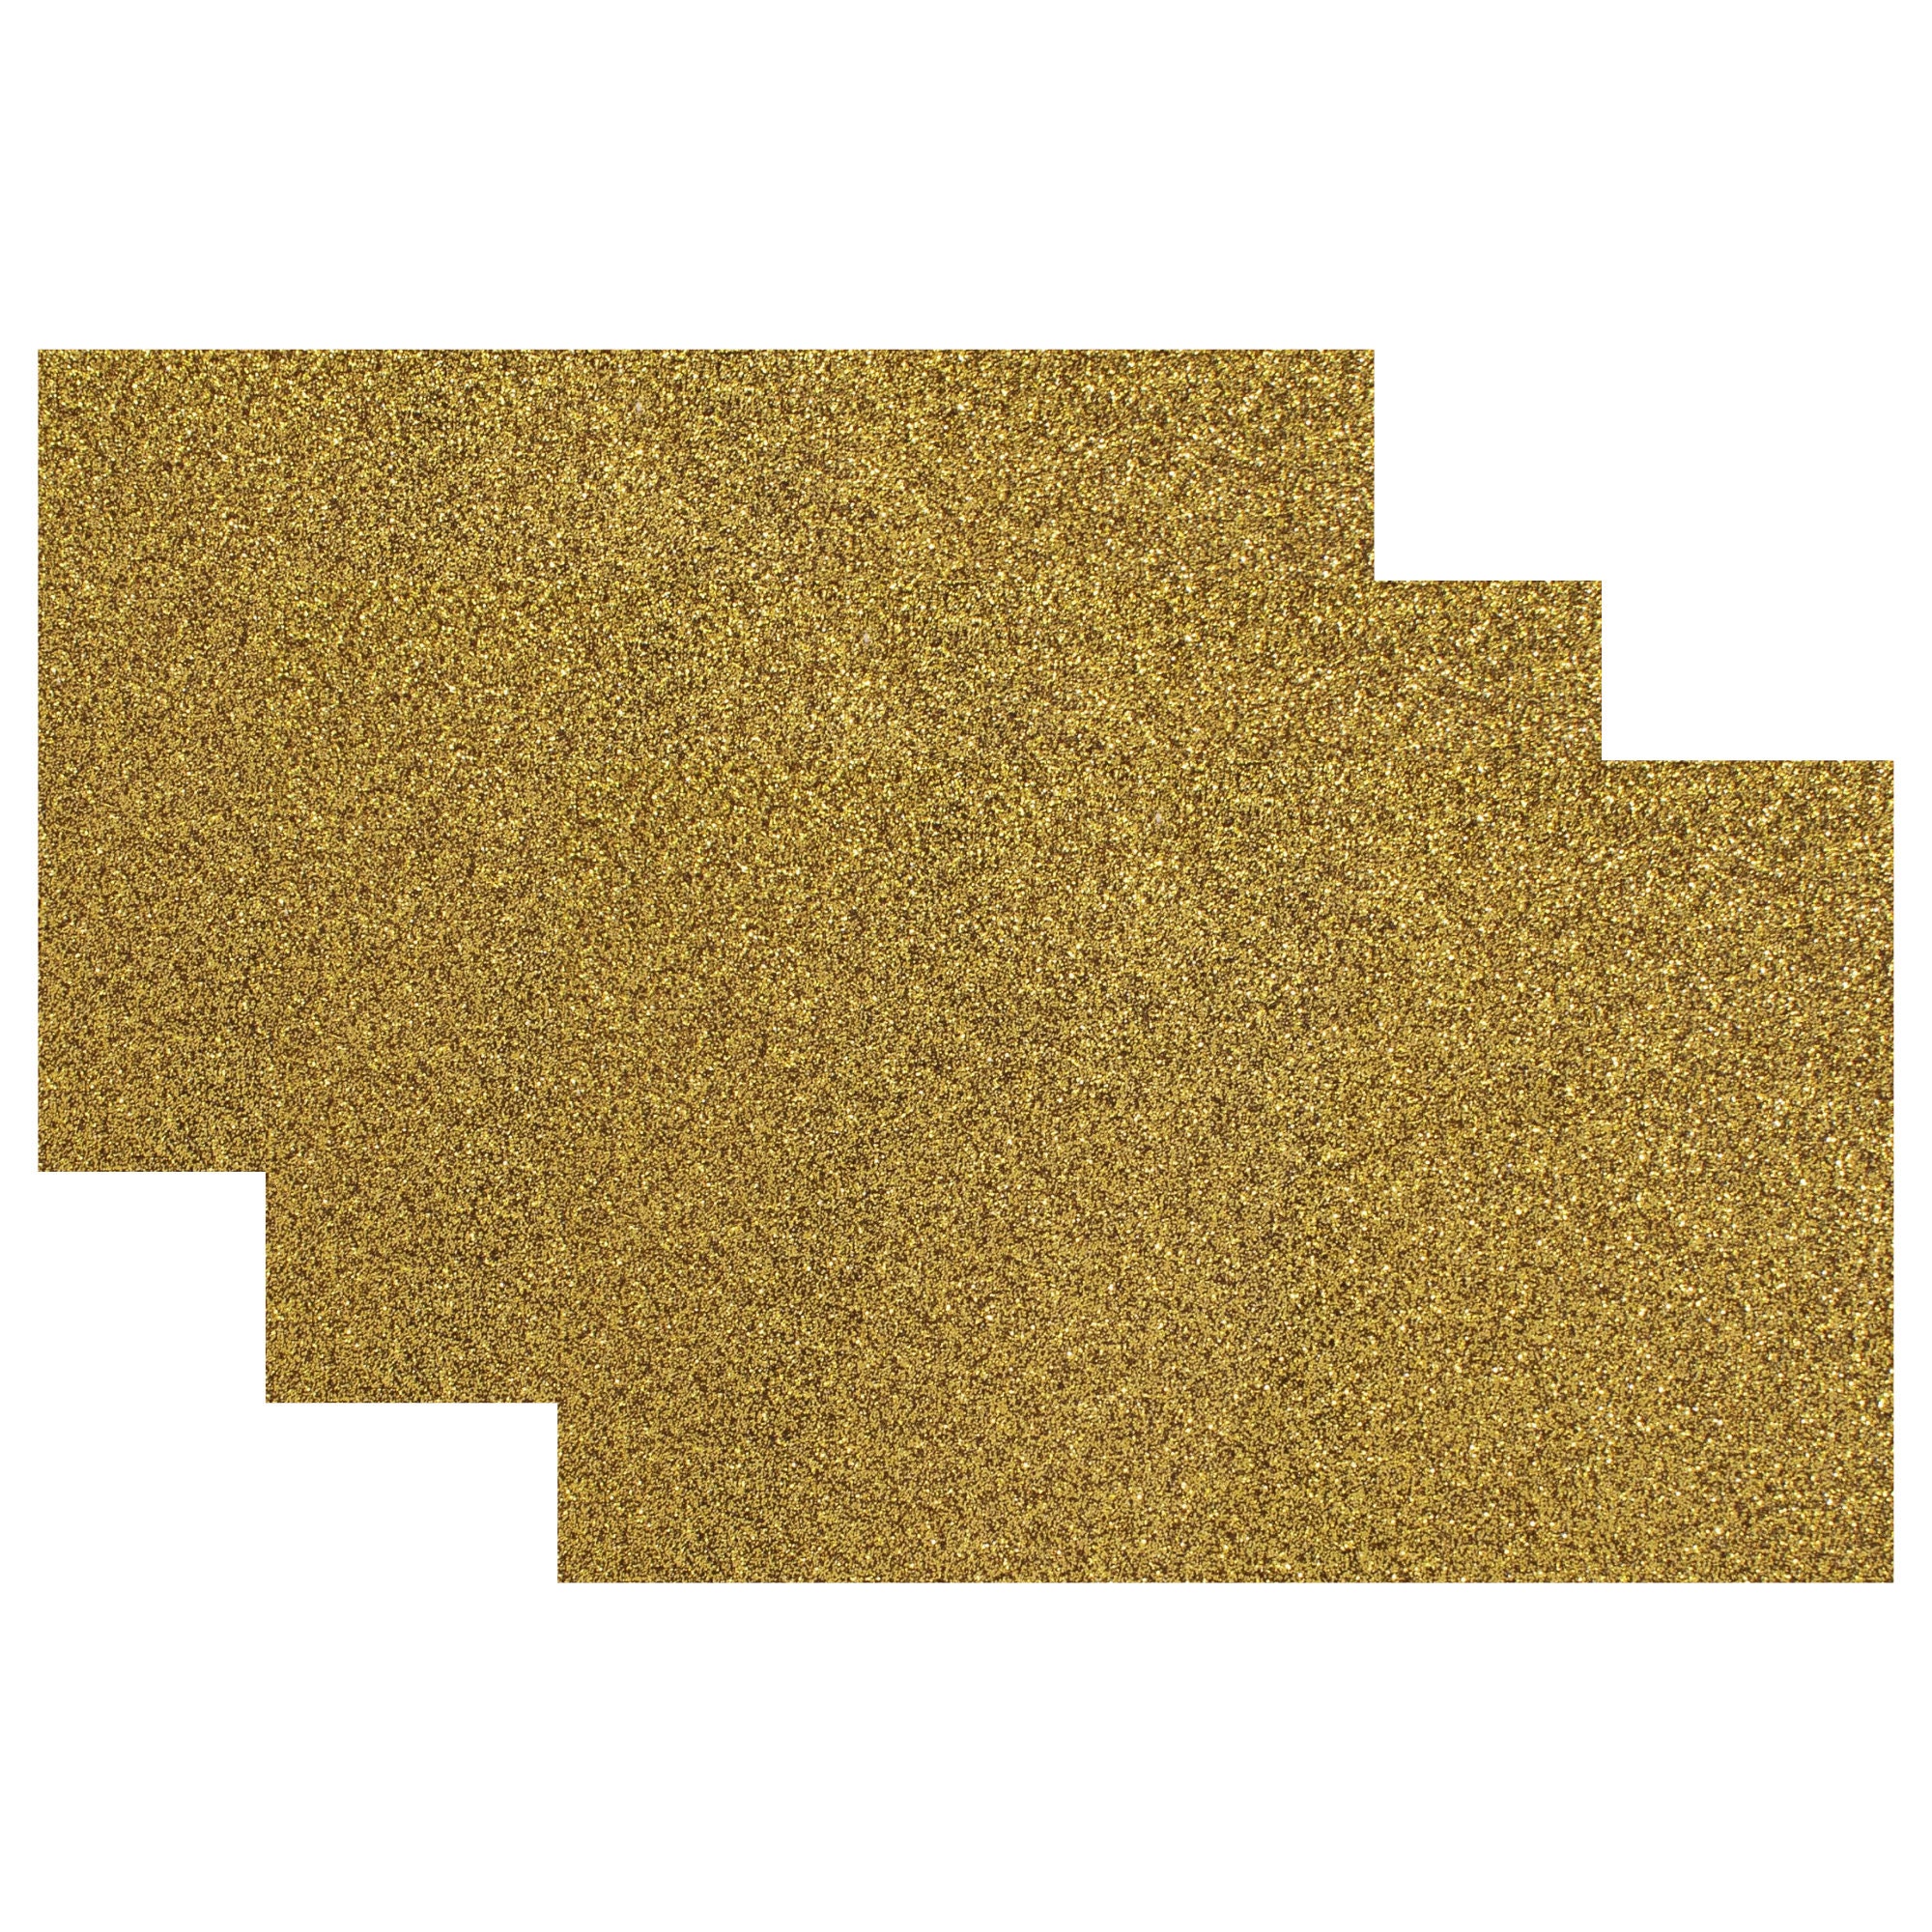 Gold Glitter Acrylic Sheets - 11.75 x 19